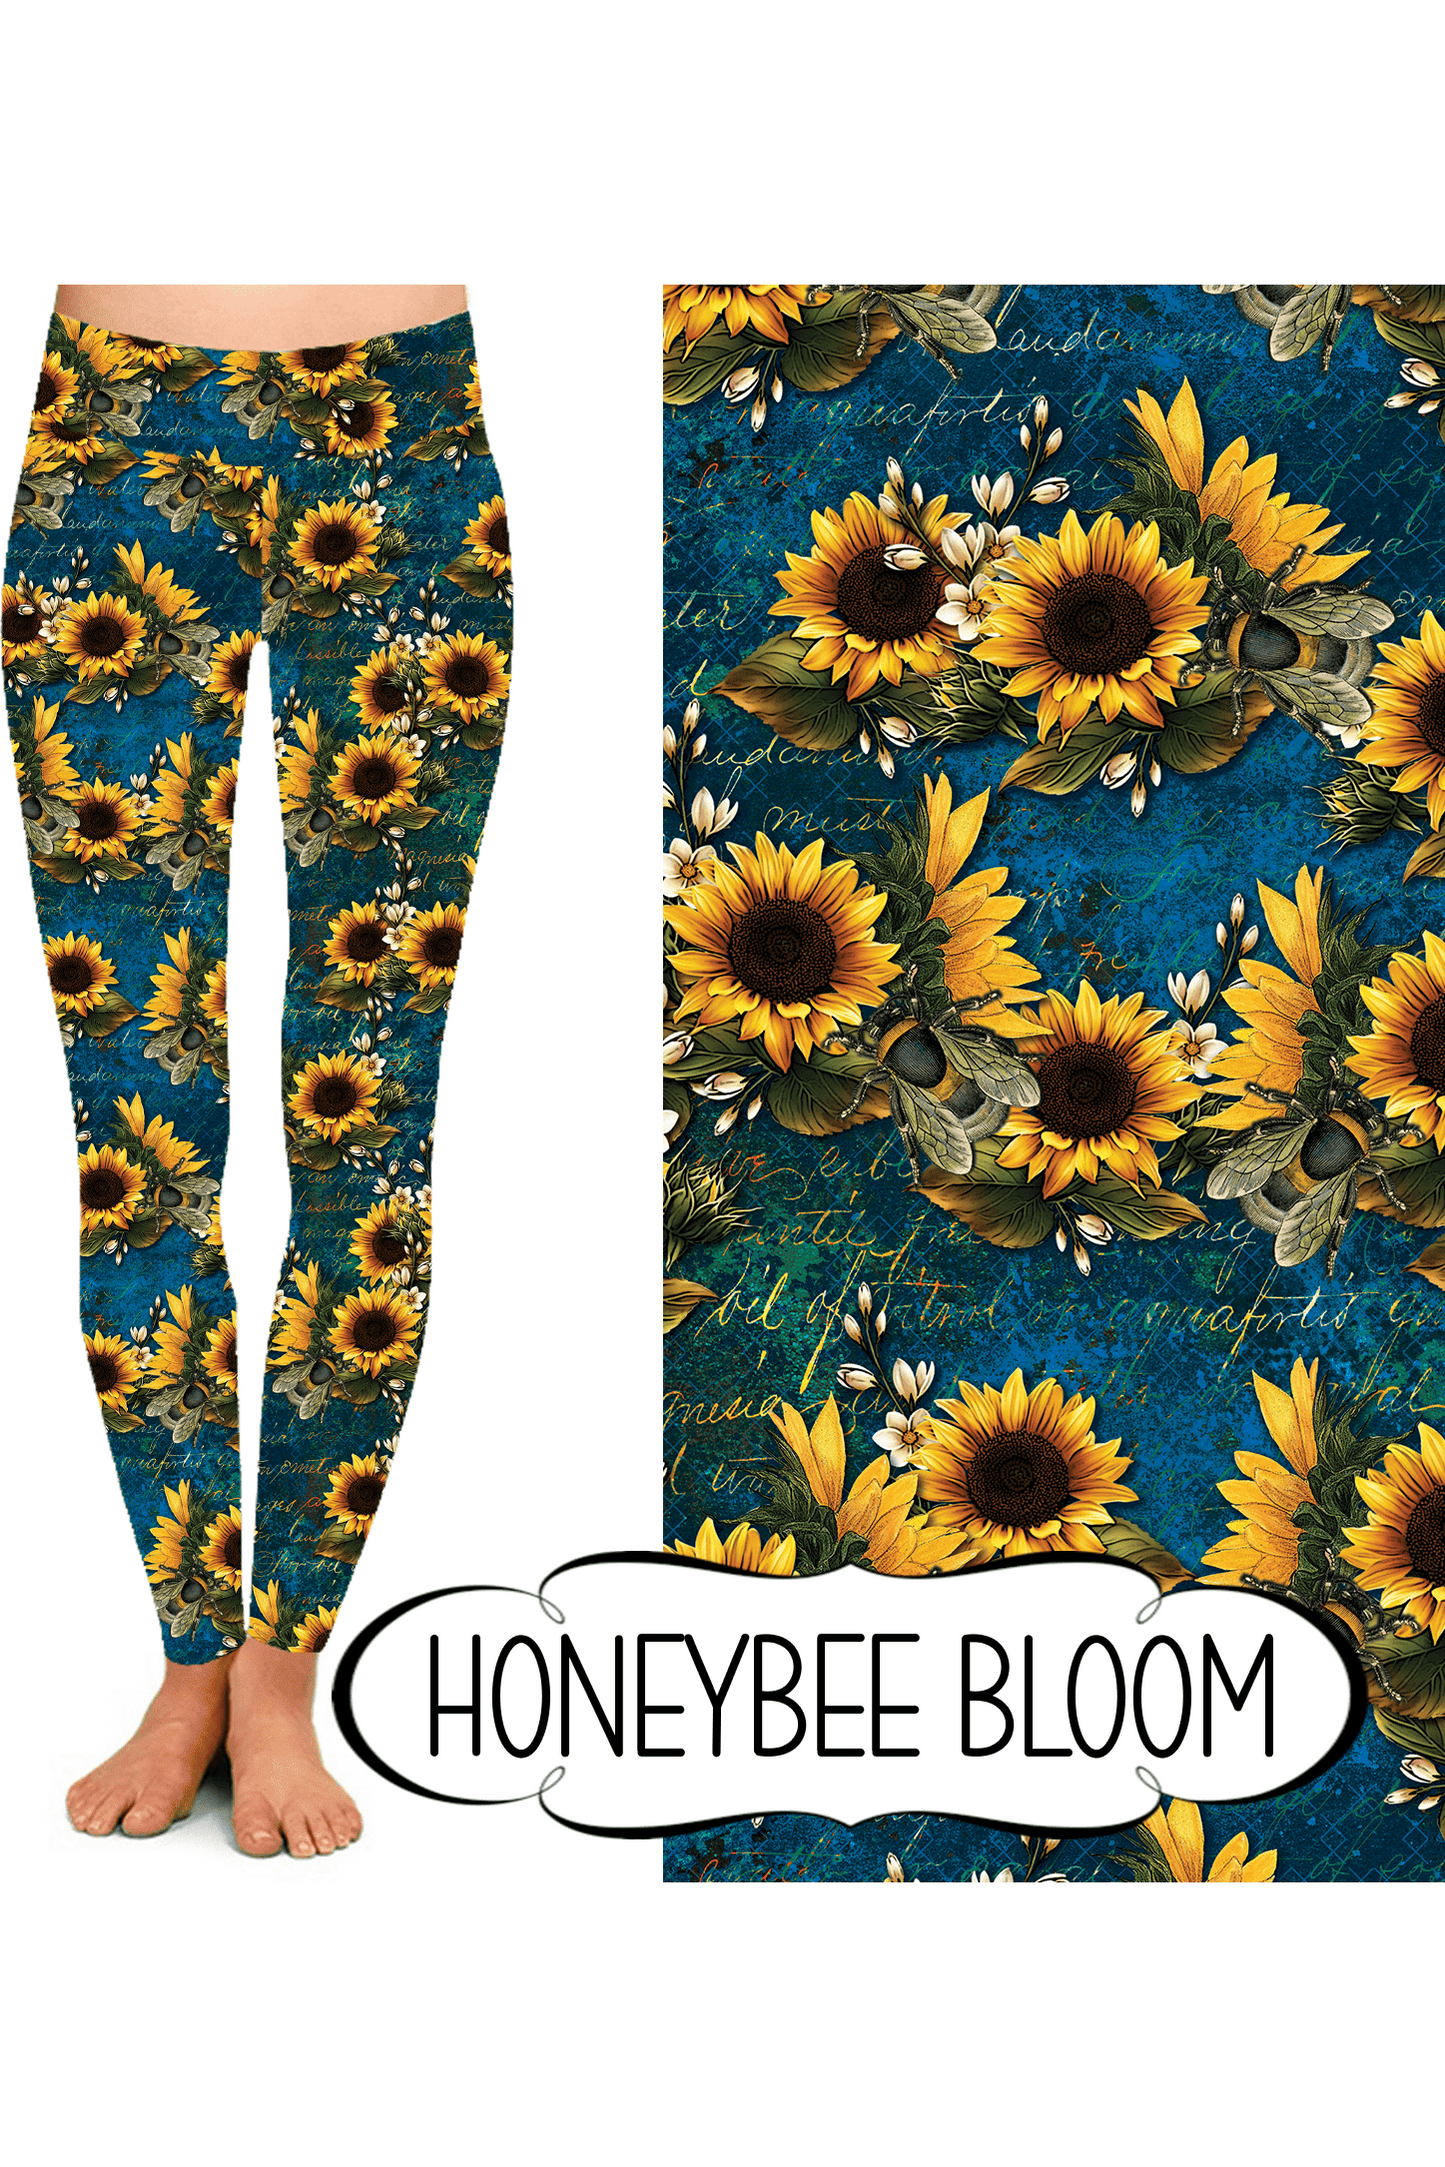 Yoga Style Leggings - Honeybee Bloom by Eleven & Co.